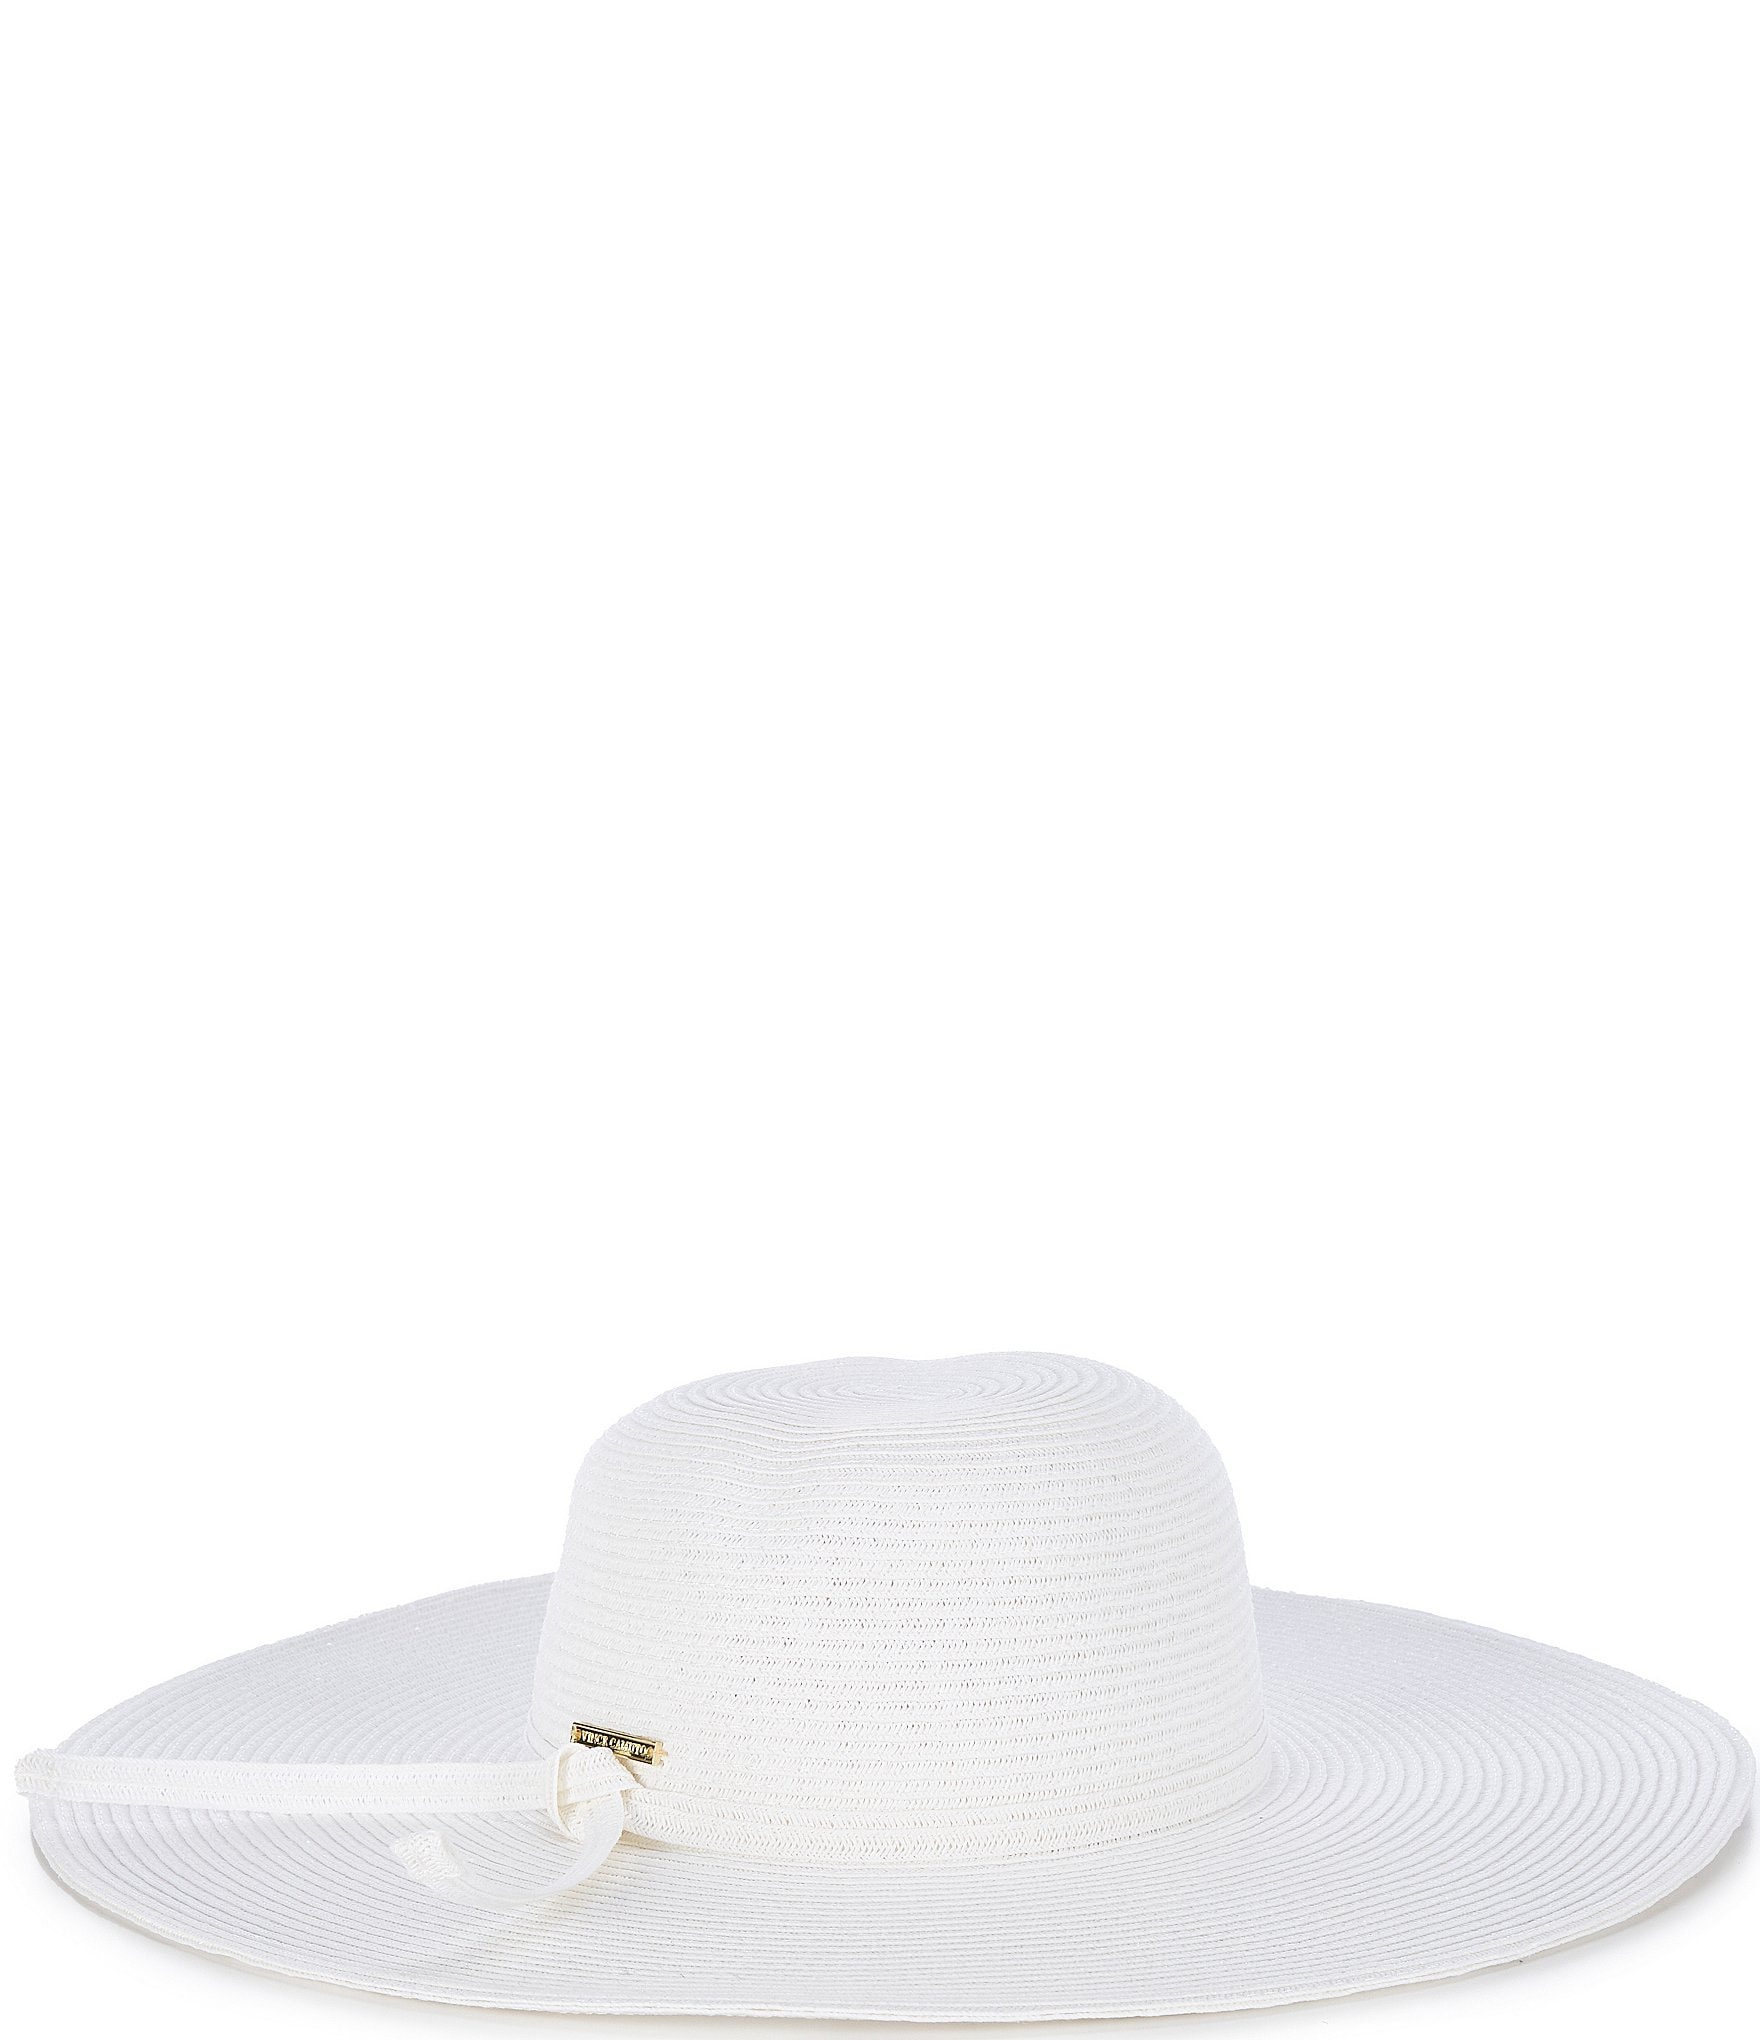 Straw Wide Brim Hat Women Derby Hat Floppy Beach Sunhat Large Floppy Hats  for Women Straw Hat - China Bucket Hat and Straw Bucket Hats price